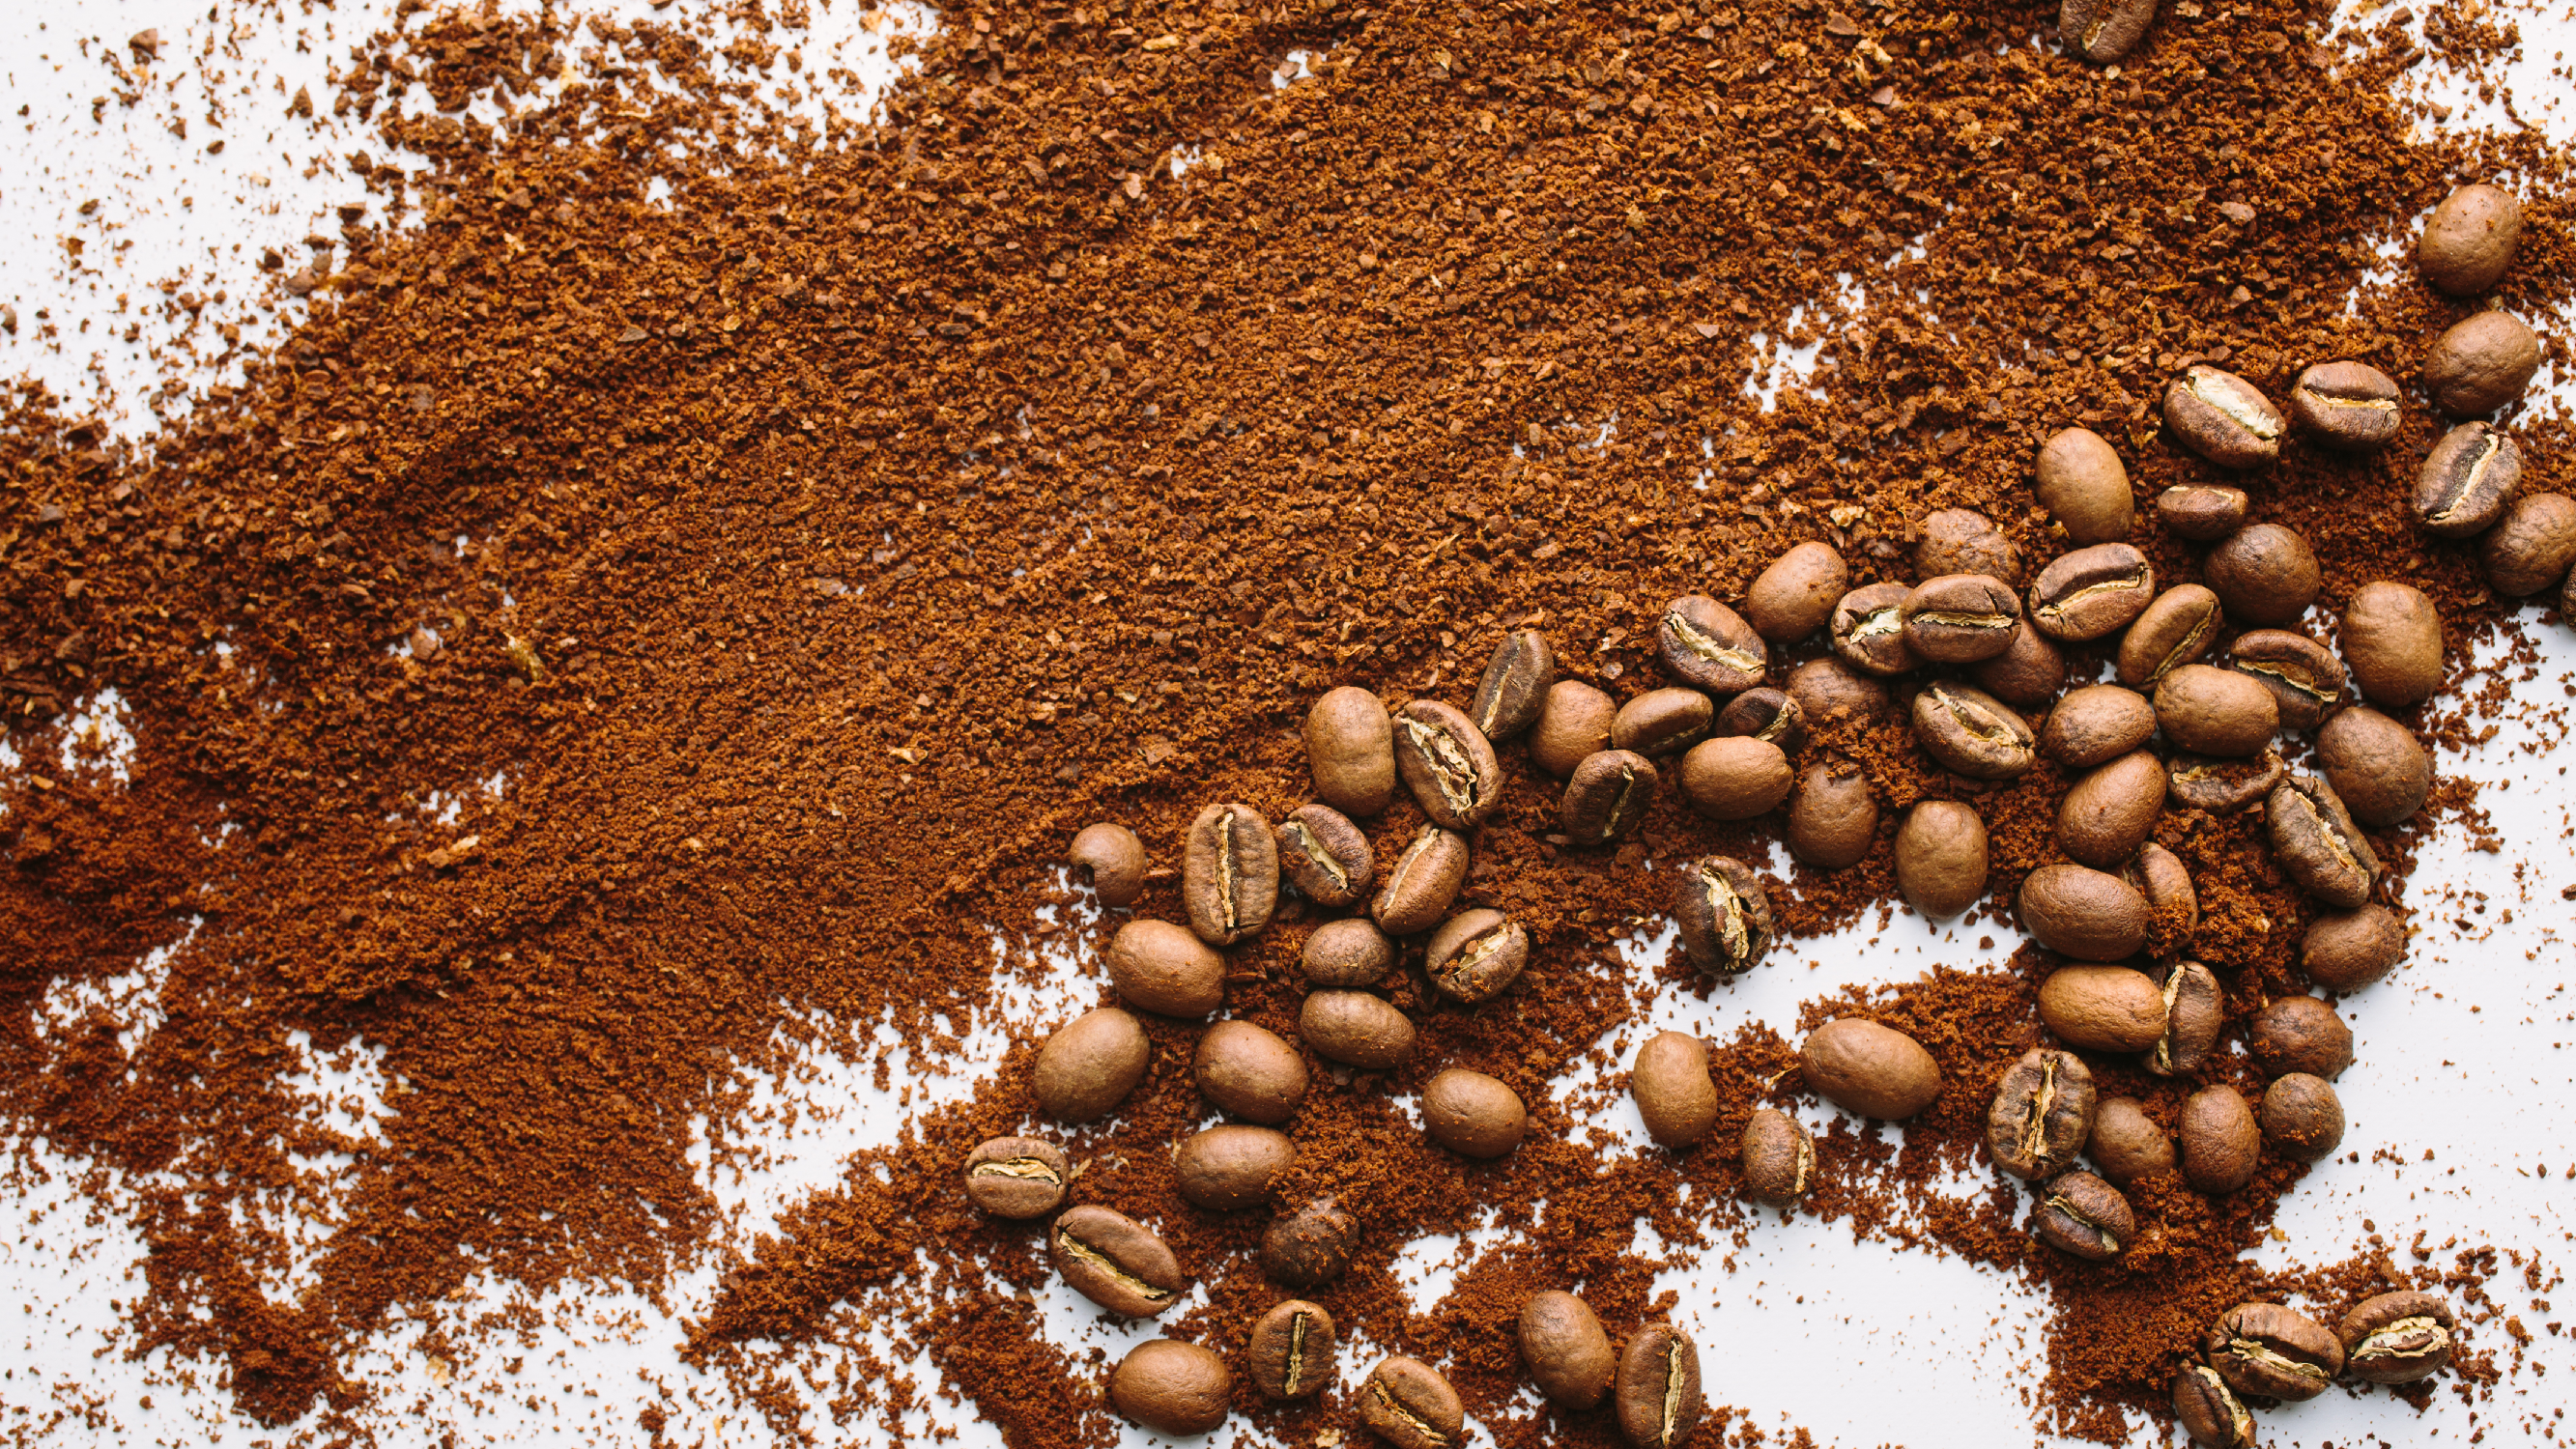 Image of coffee ground coffee and whole bean coffee.